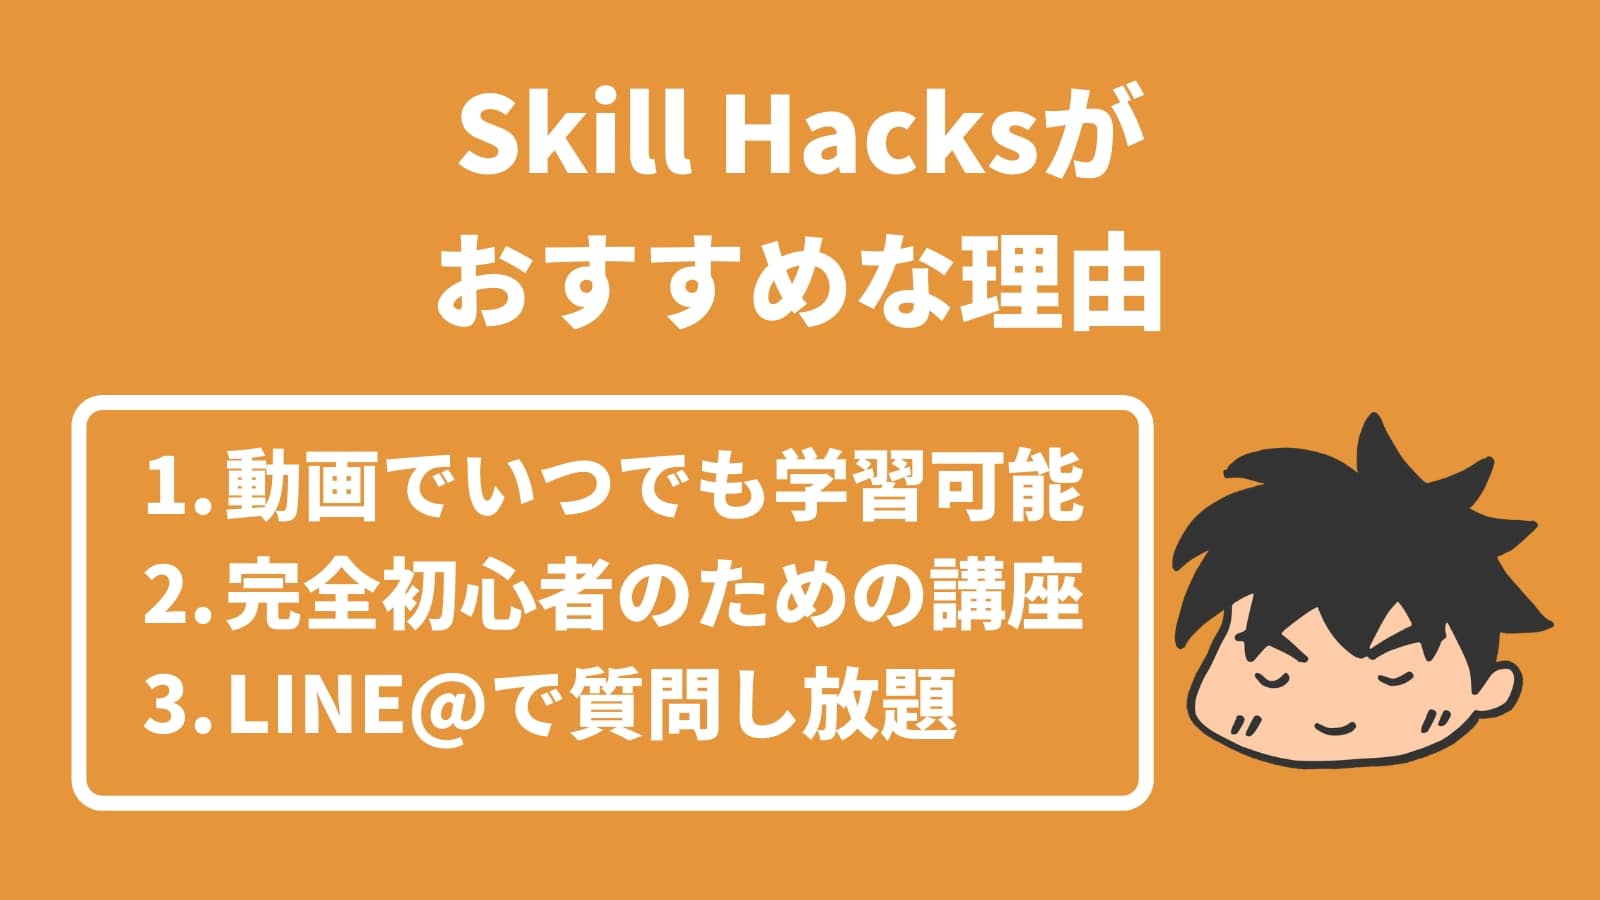 Skill Hacksが おすすめな理由